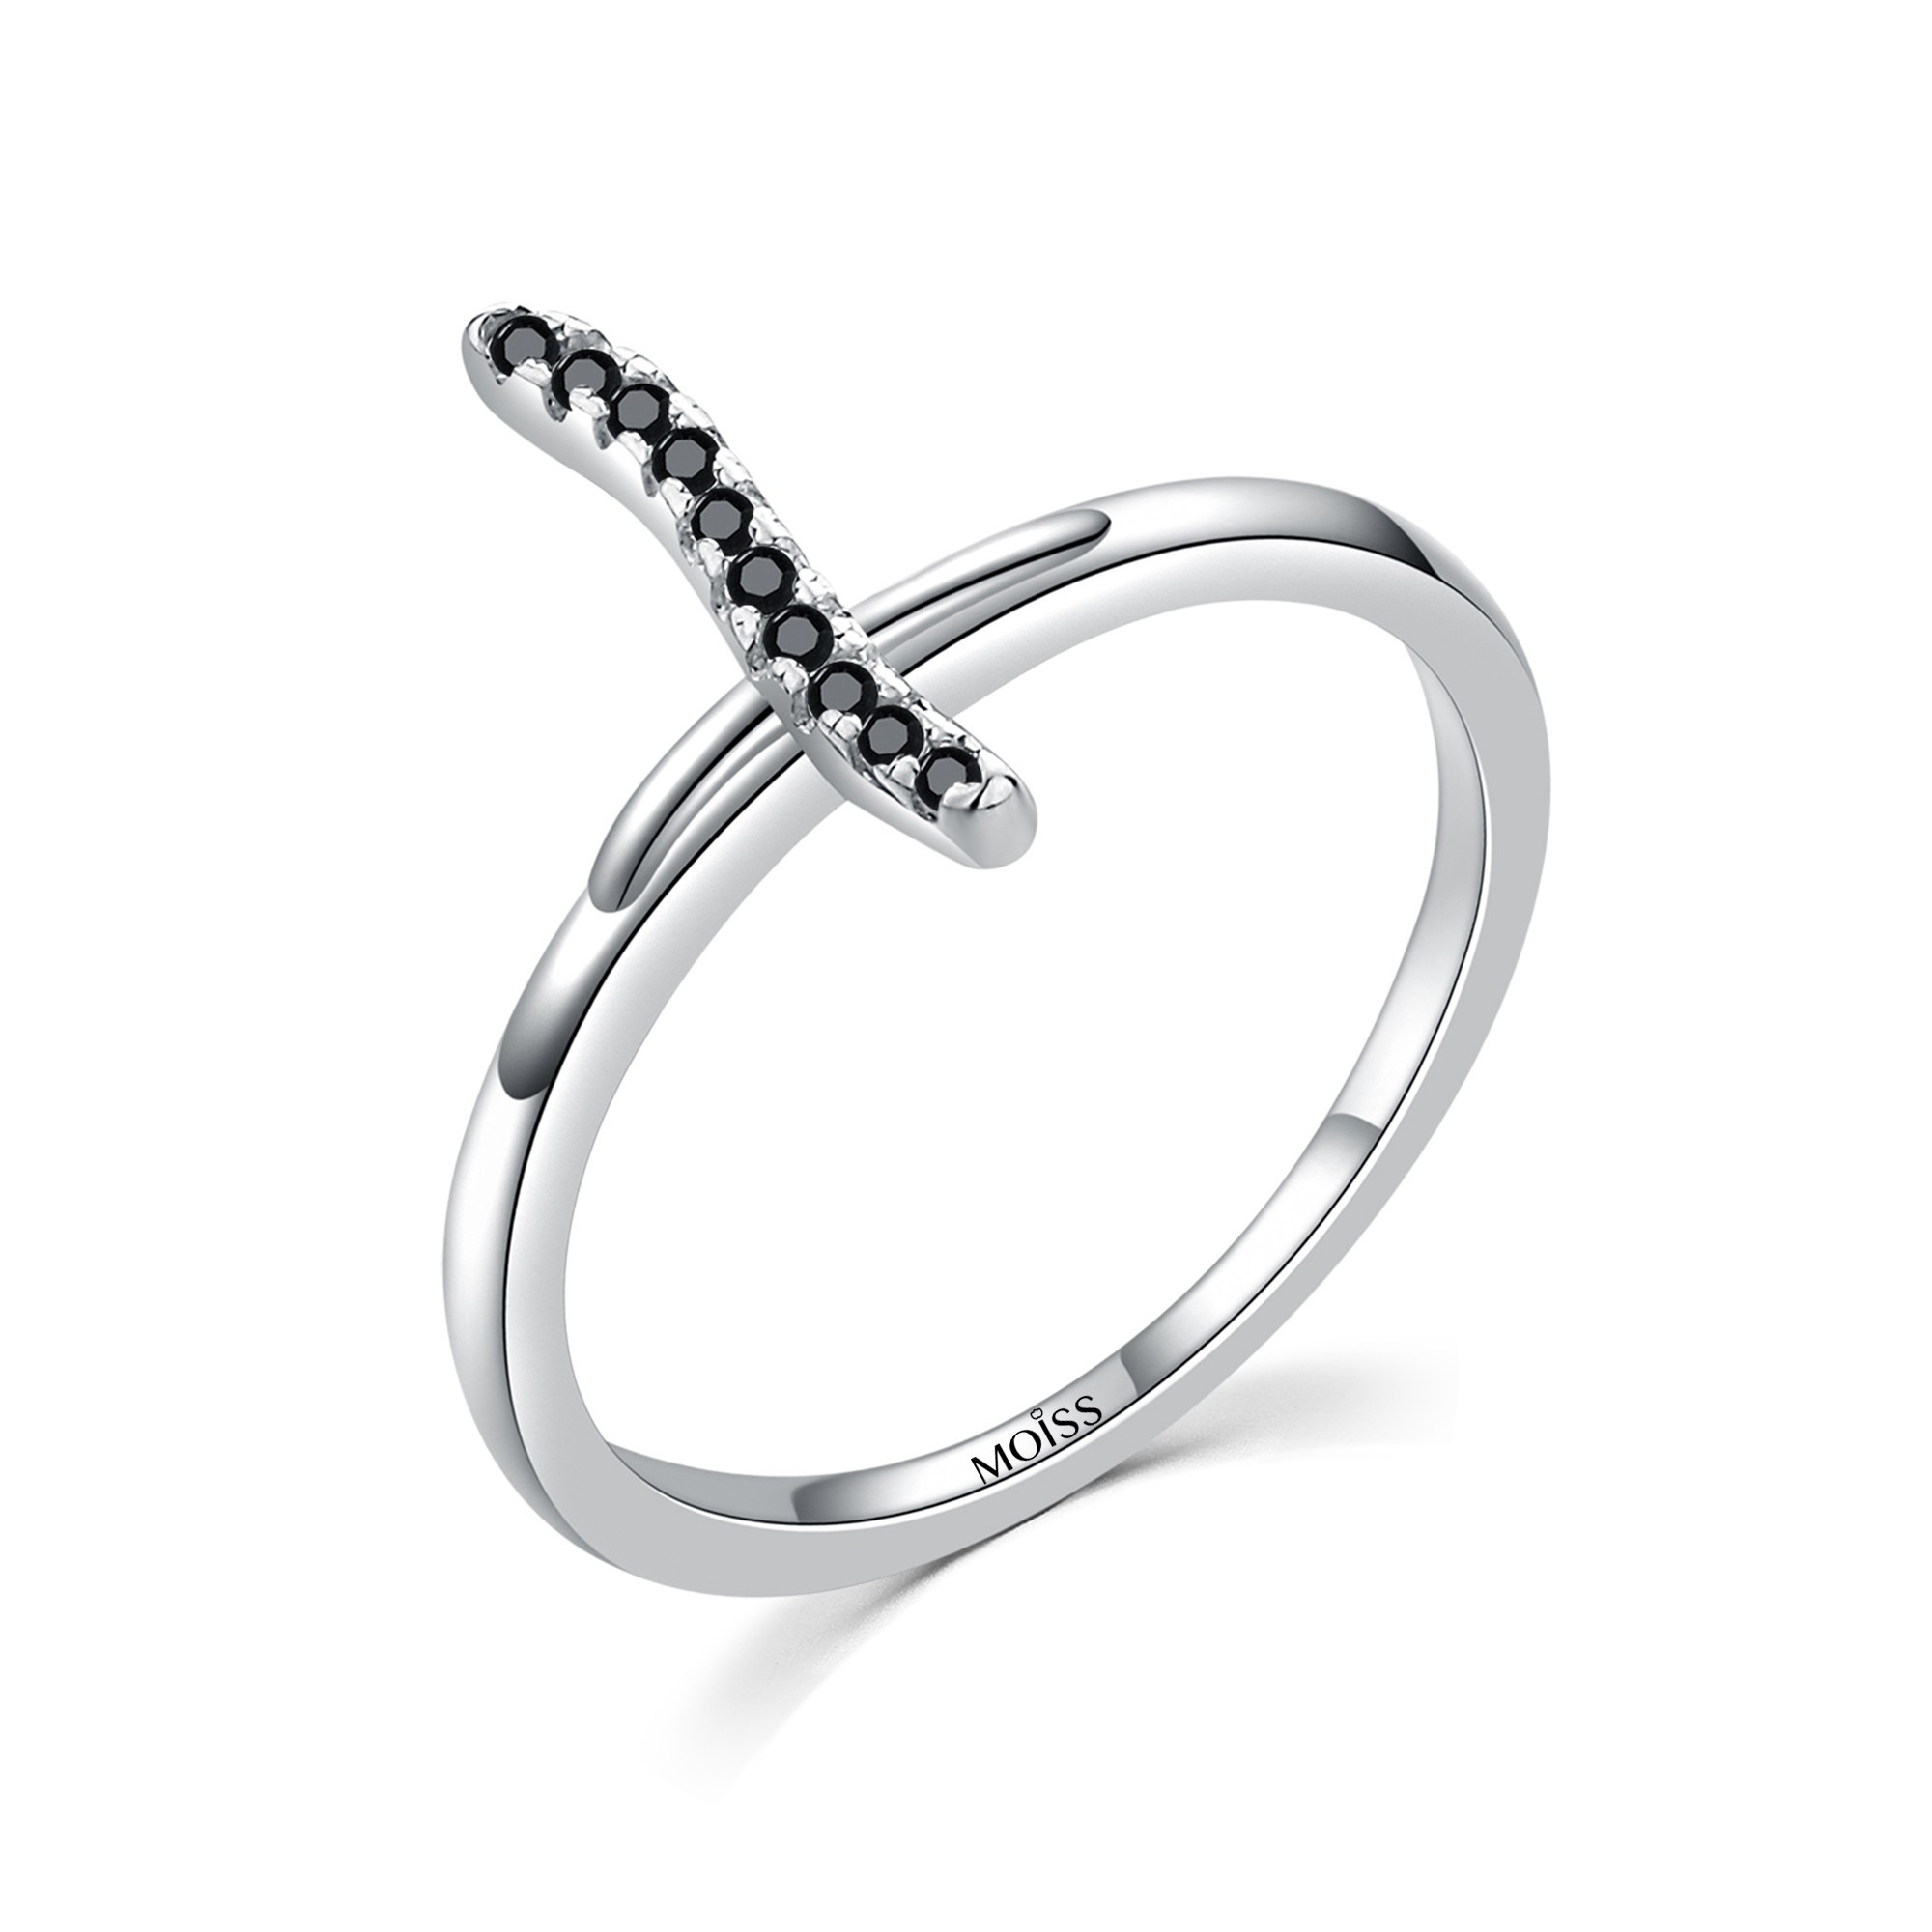 MOISS Moiss stříbrný prsten KŘÍŽEK s černým zirkonem R0002039 Velikost 52 mm R0002040